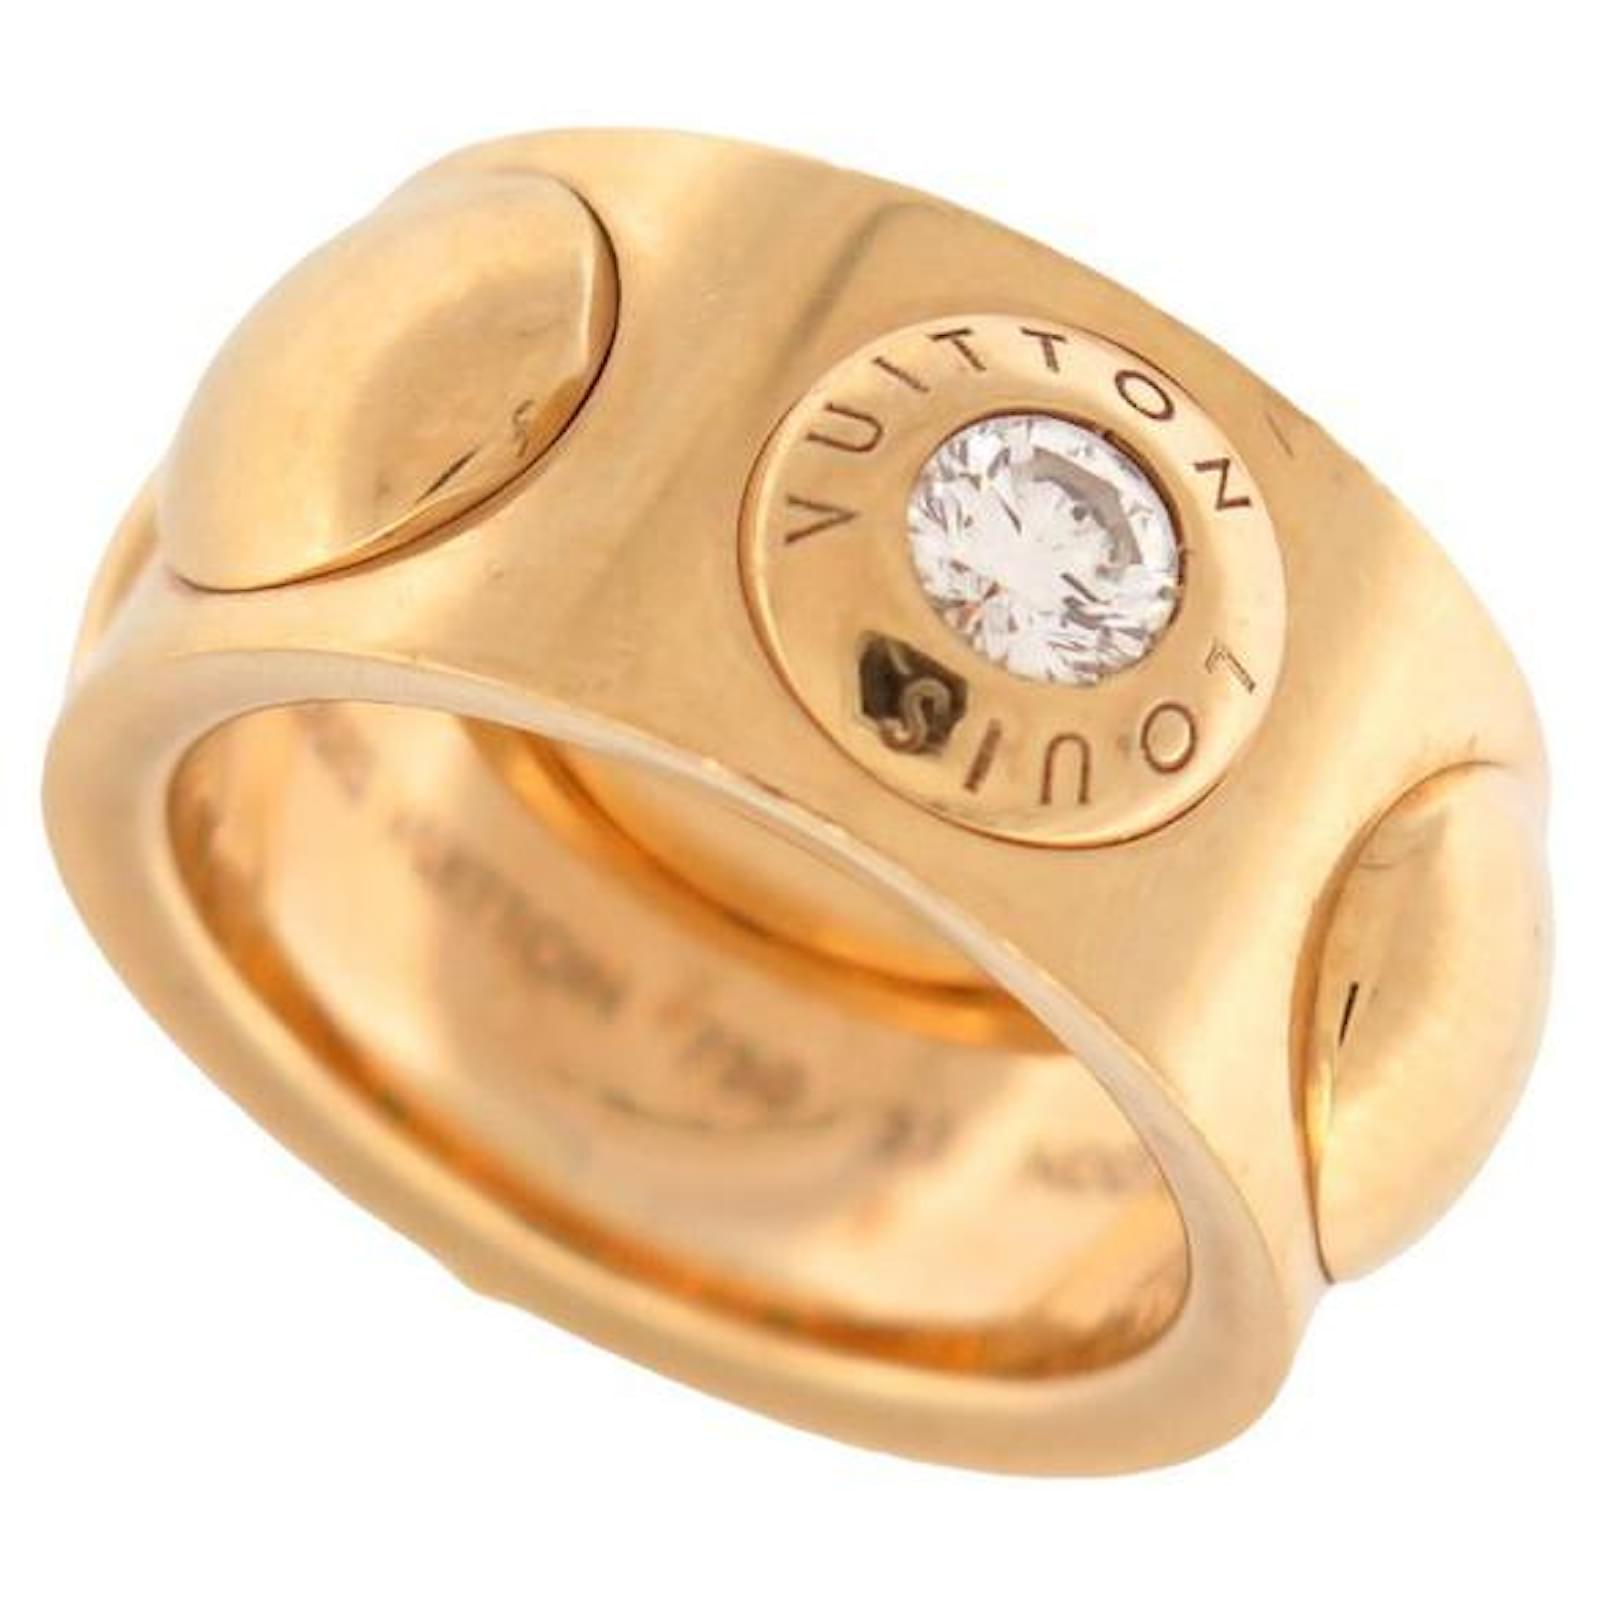 Louis Vuitton Empreinte Ring, Yellow Gold Gold. Size 53